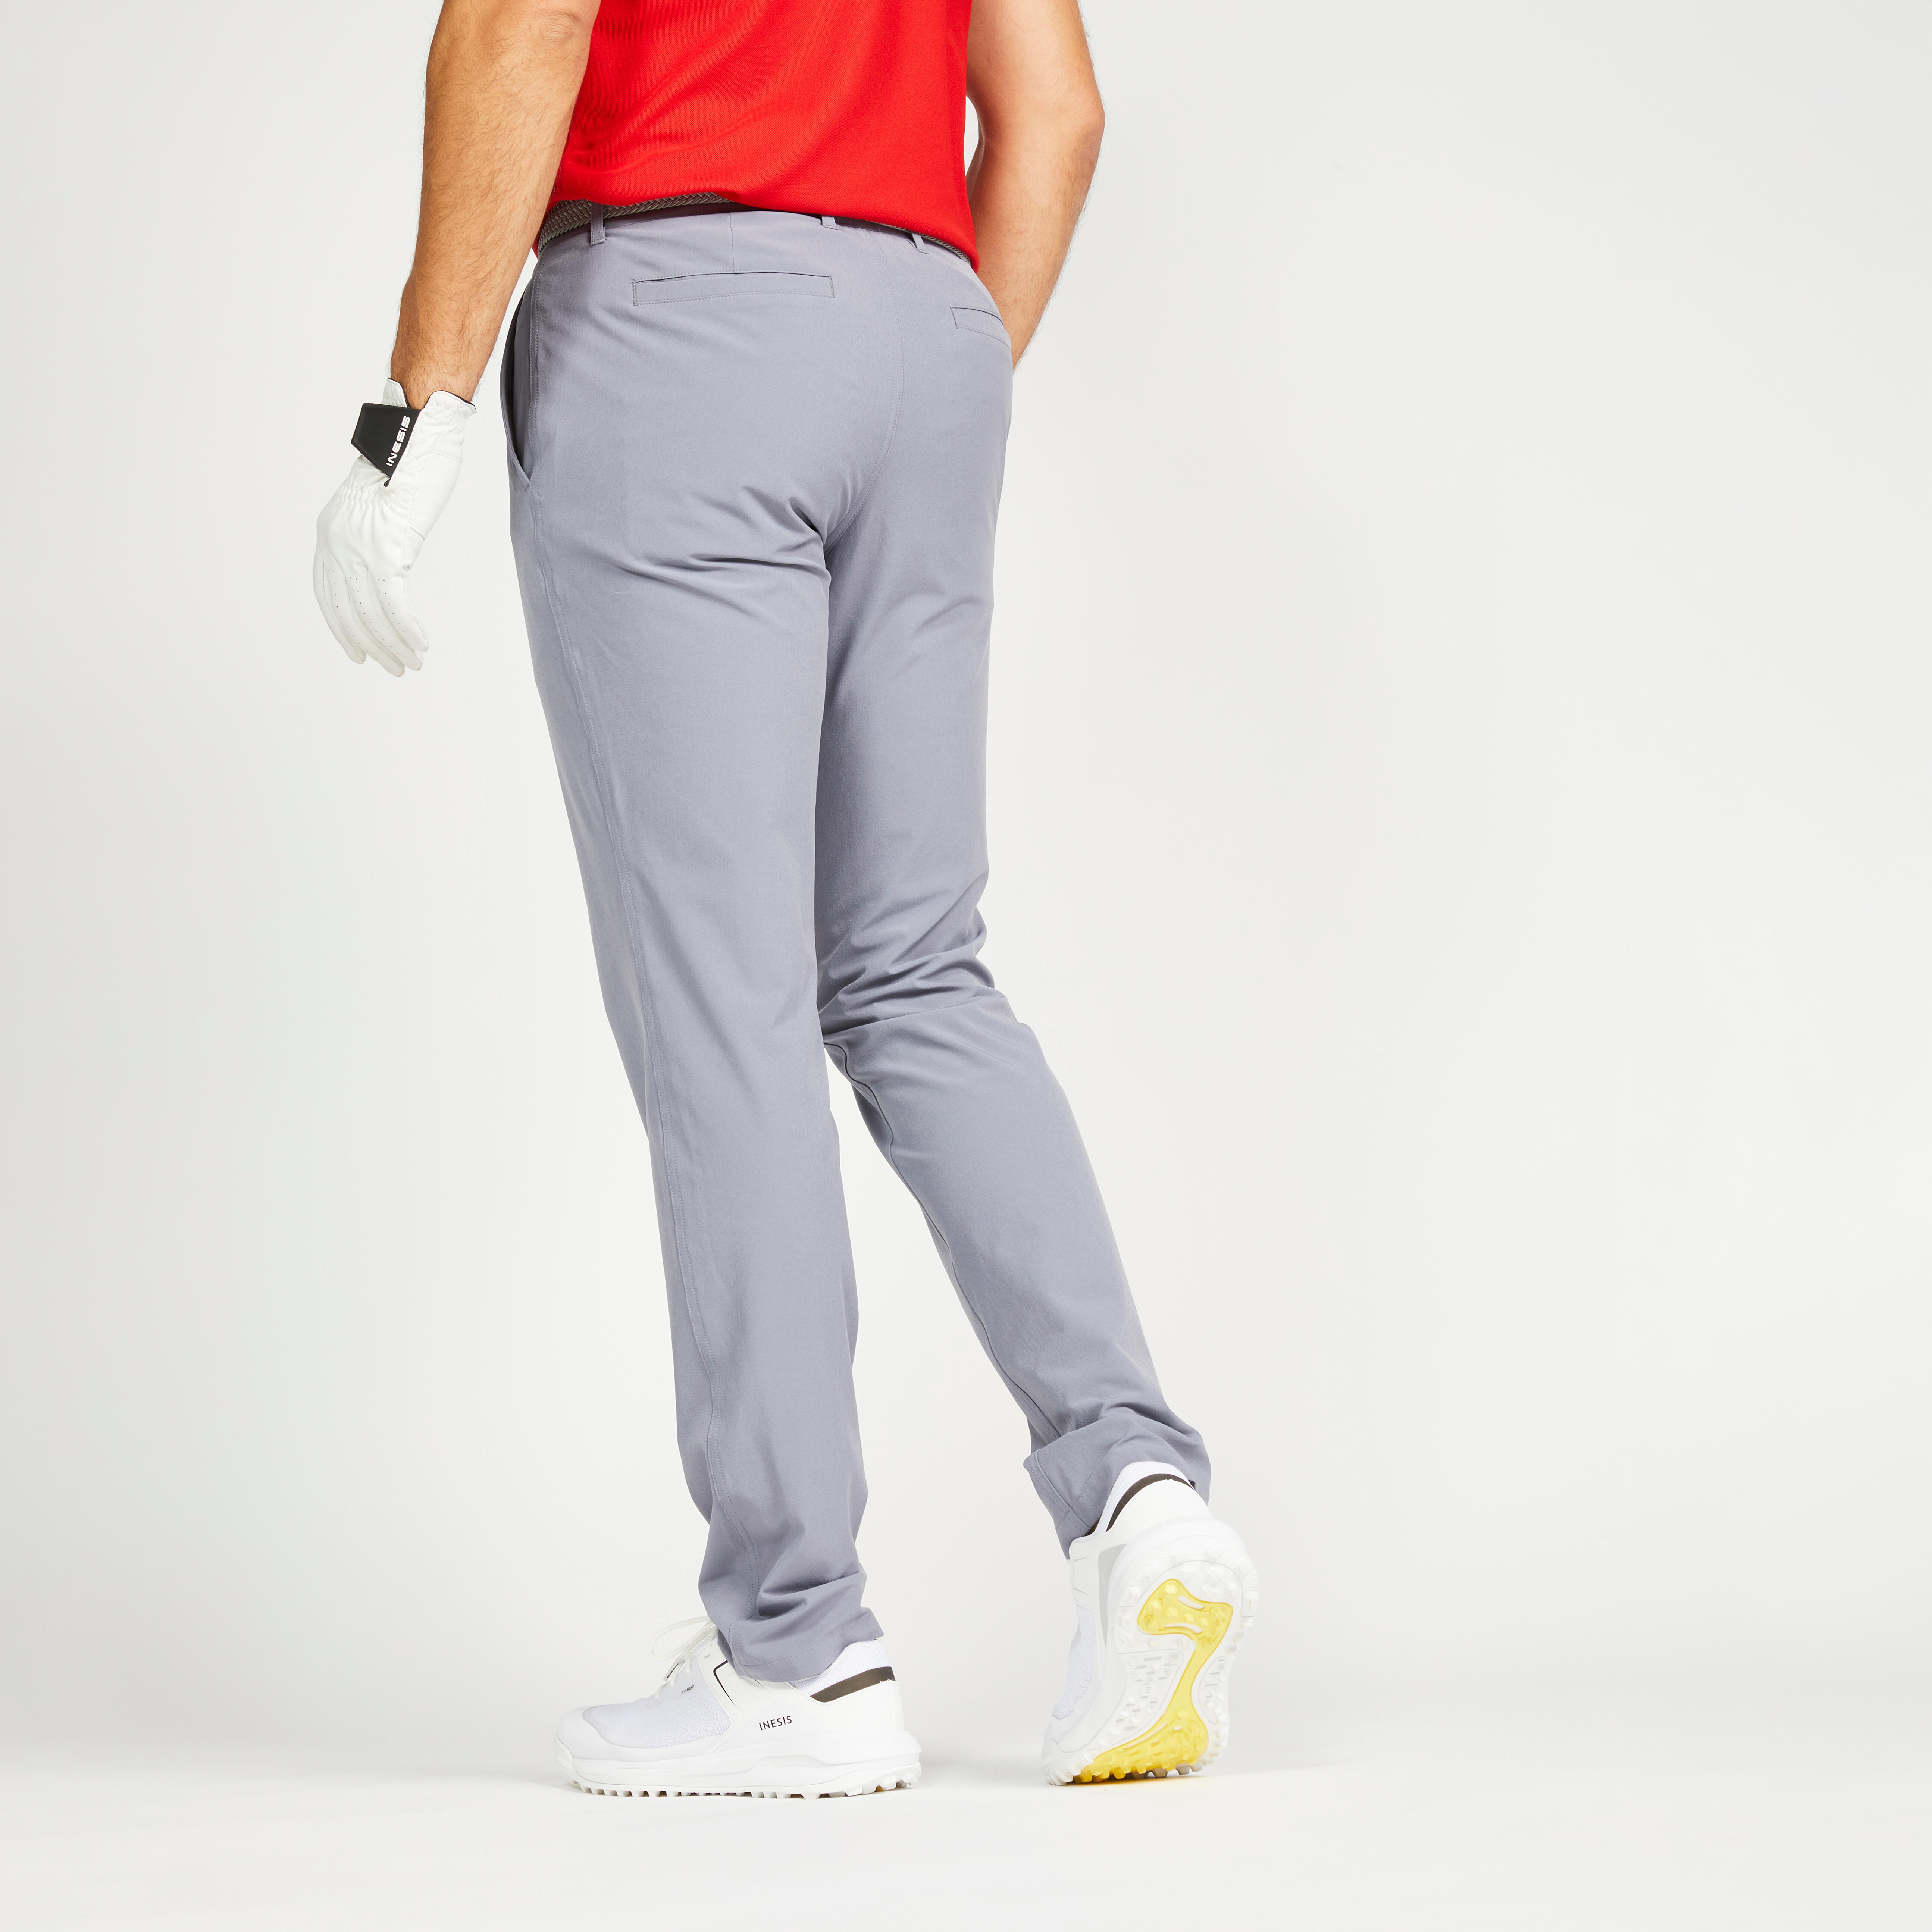 Men's Golf Pants - WW 500 Grey - Pebble grey - Inesis - Decathlon